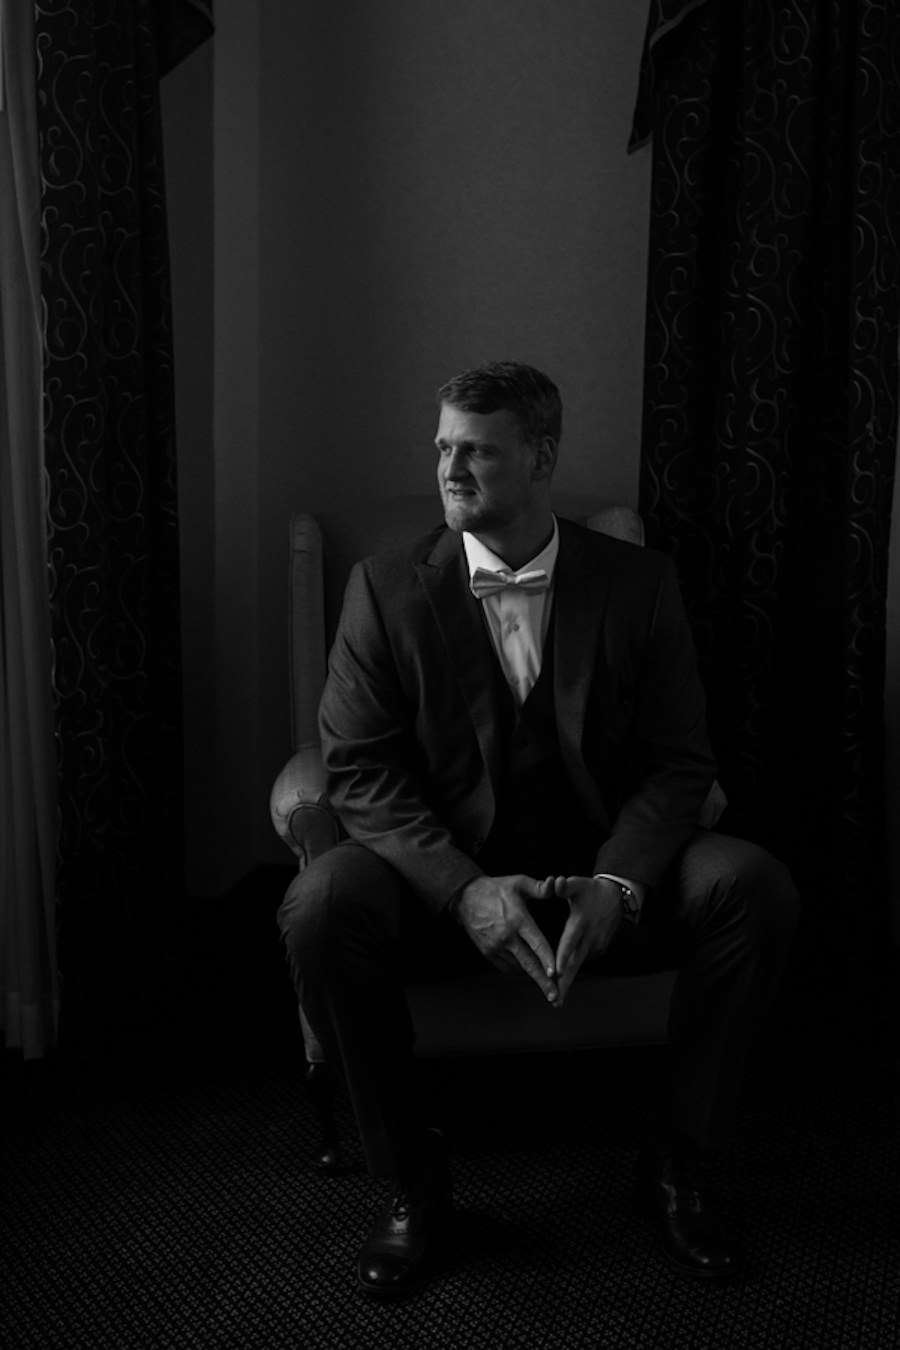 Indoor Groom Black and White Wedding Portrait | Cleveland Browns Football Player Charley Hughlett Wedding